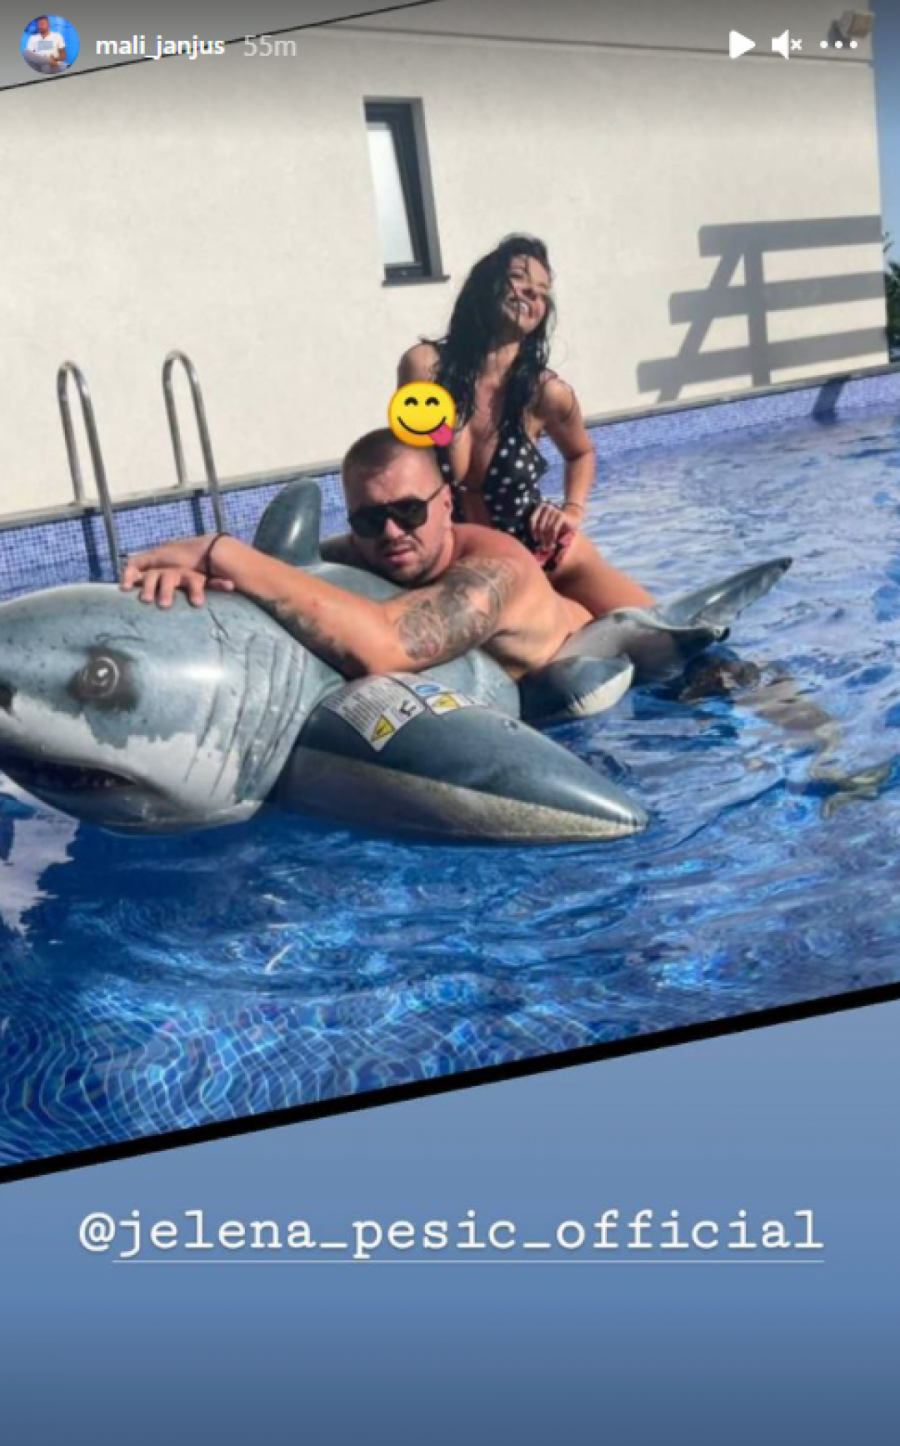 SAD JE S NJOM U ŠEMI?! Popularna zadrugarka zajahala Janjuša u bazenu, nova afera na pomolu?! (FOTO+VIDEO)